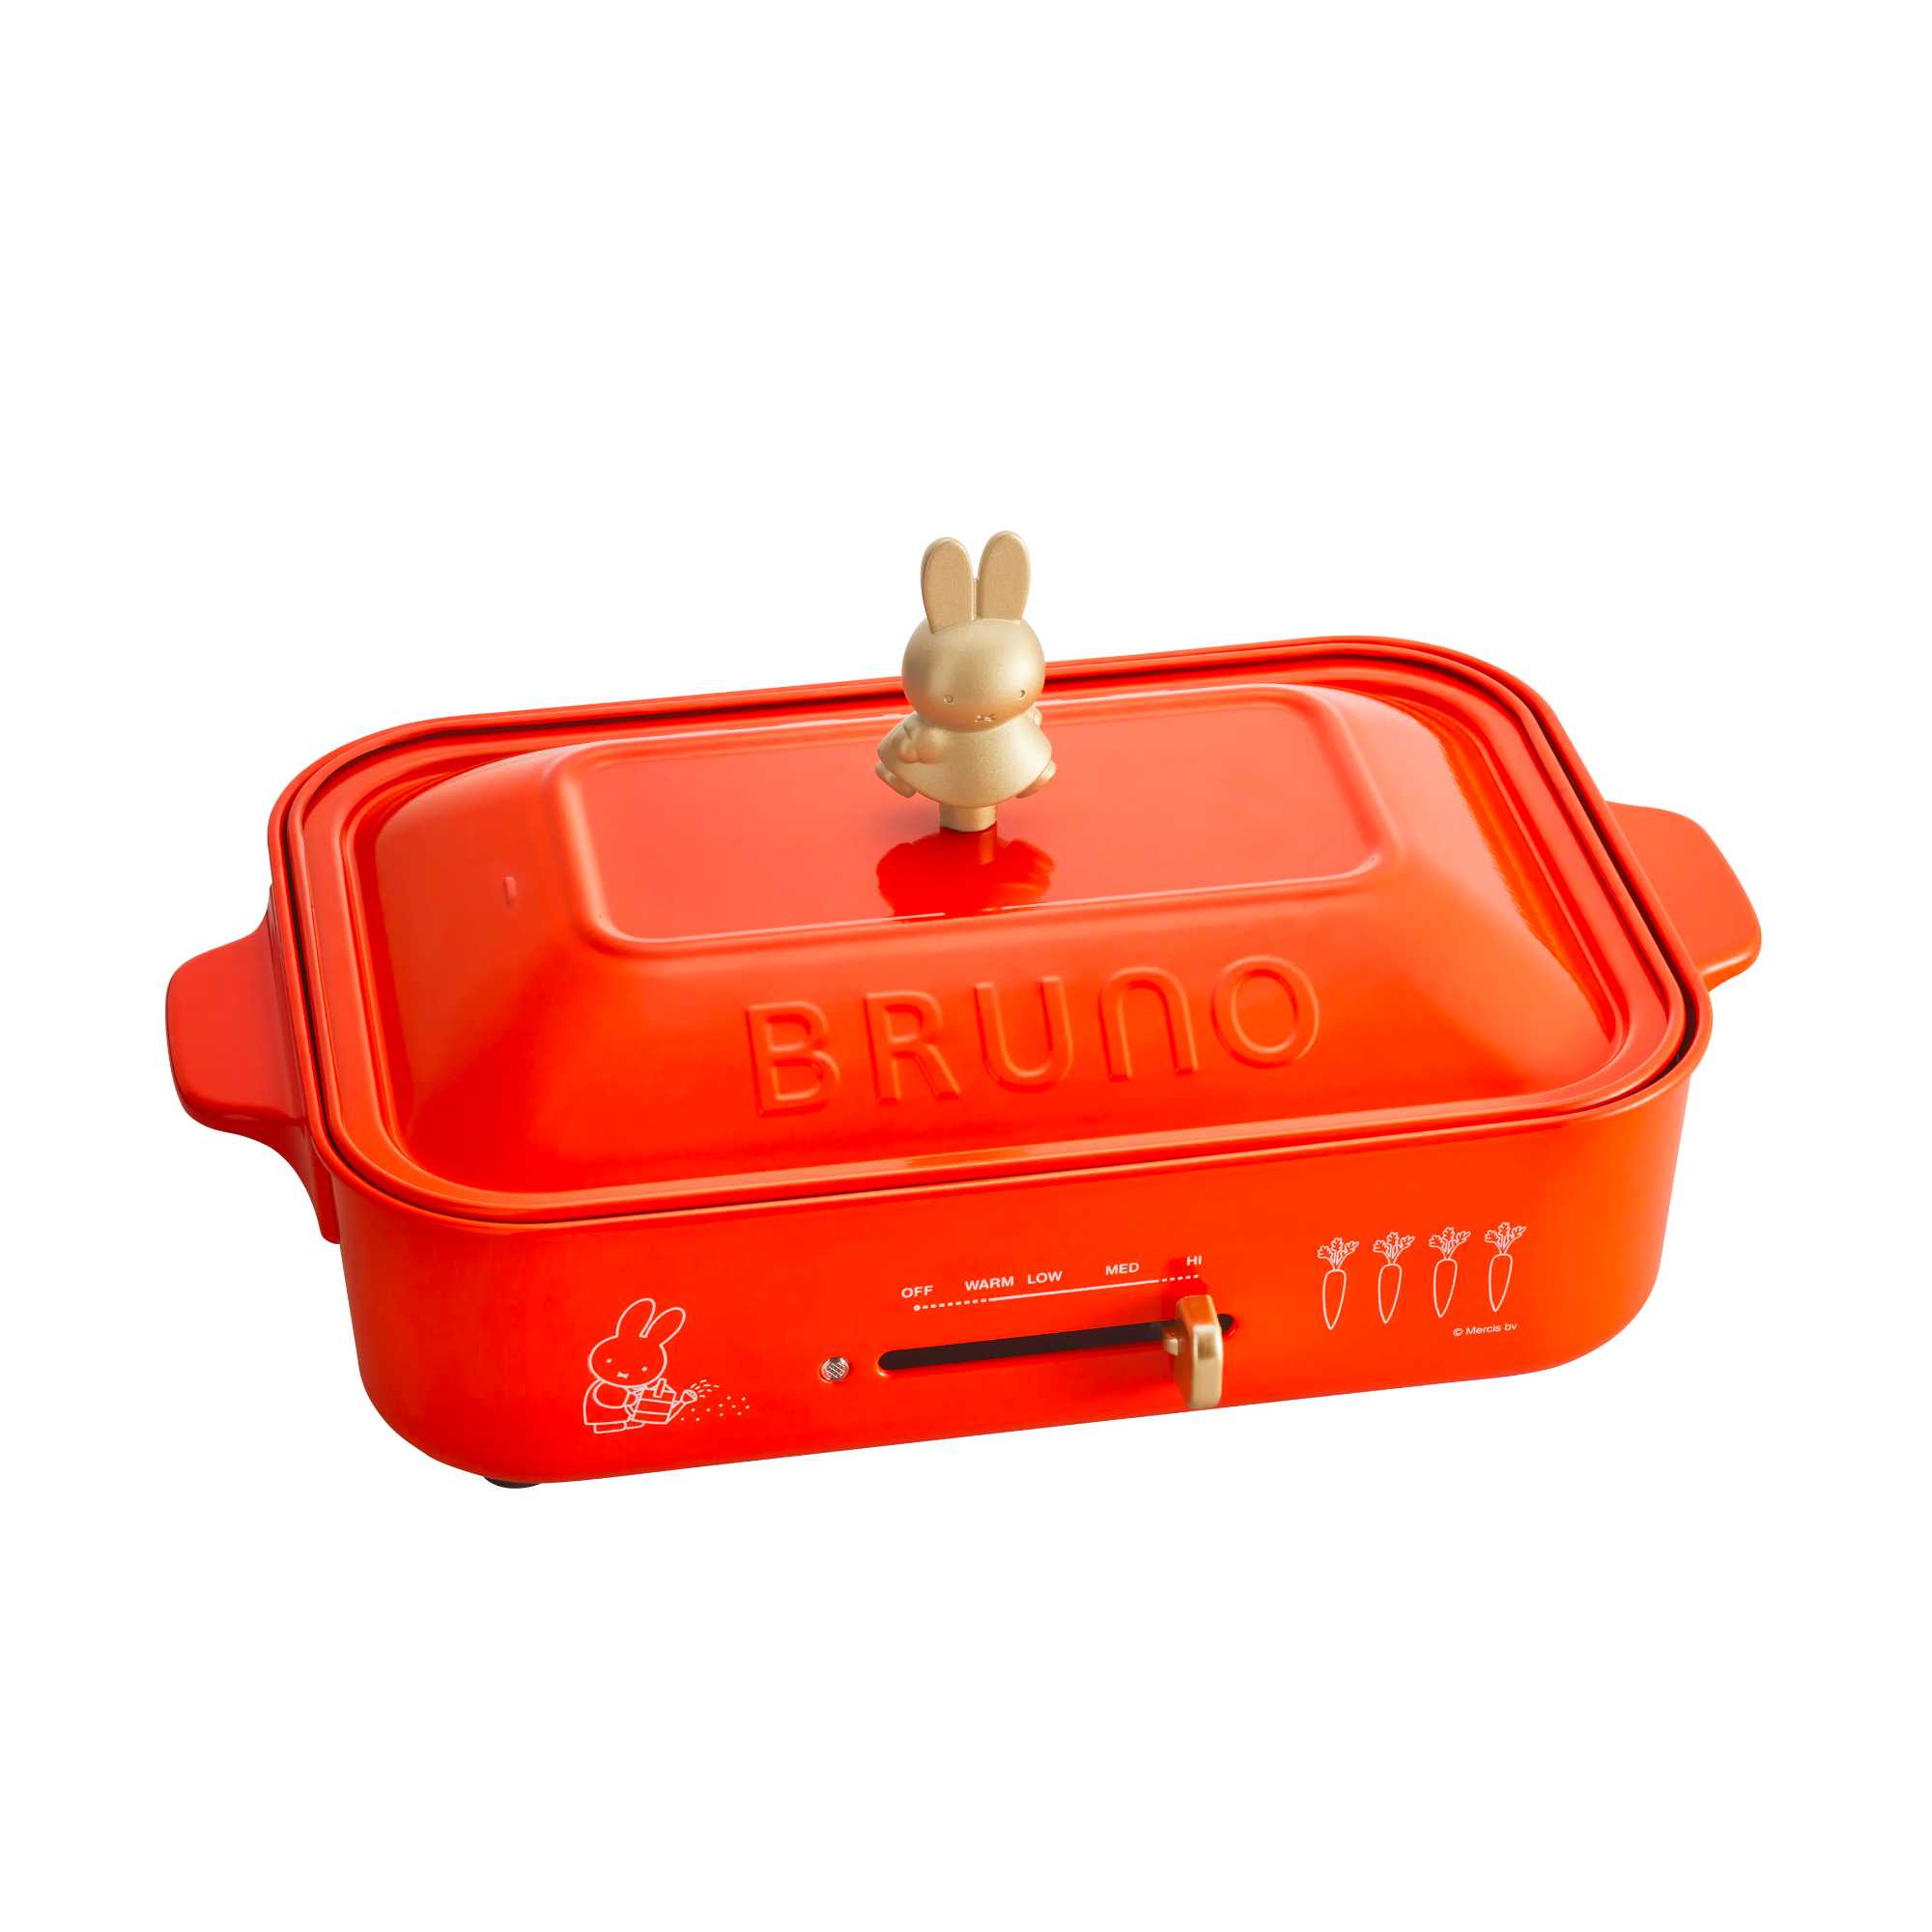 BRUNO x Miffy Compact Hotplate